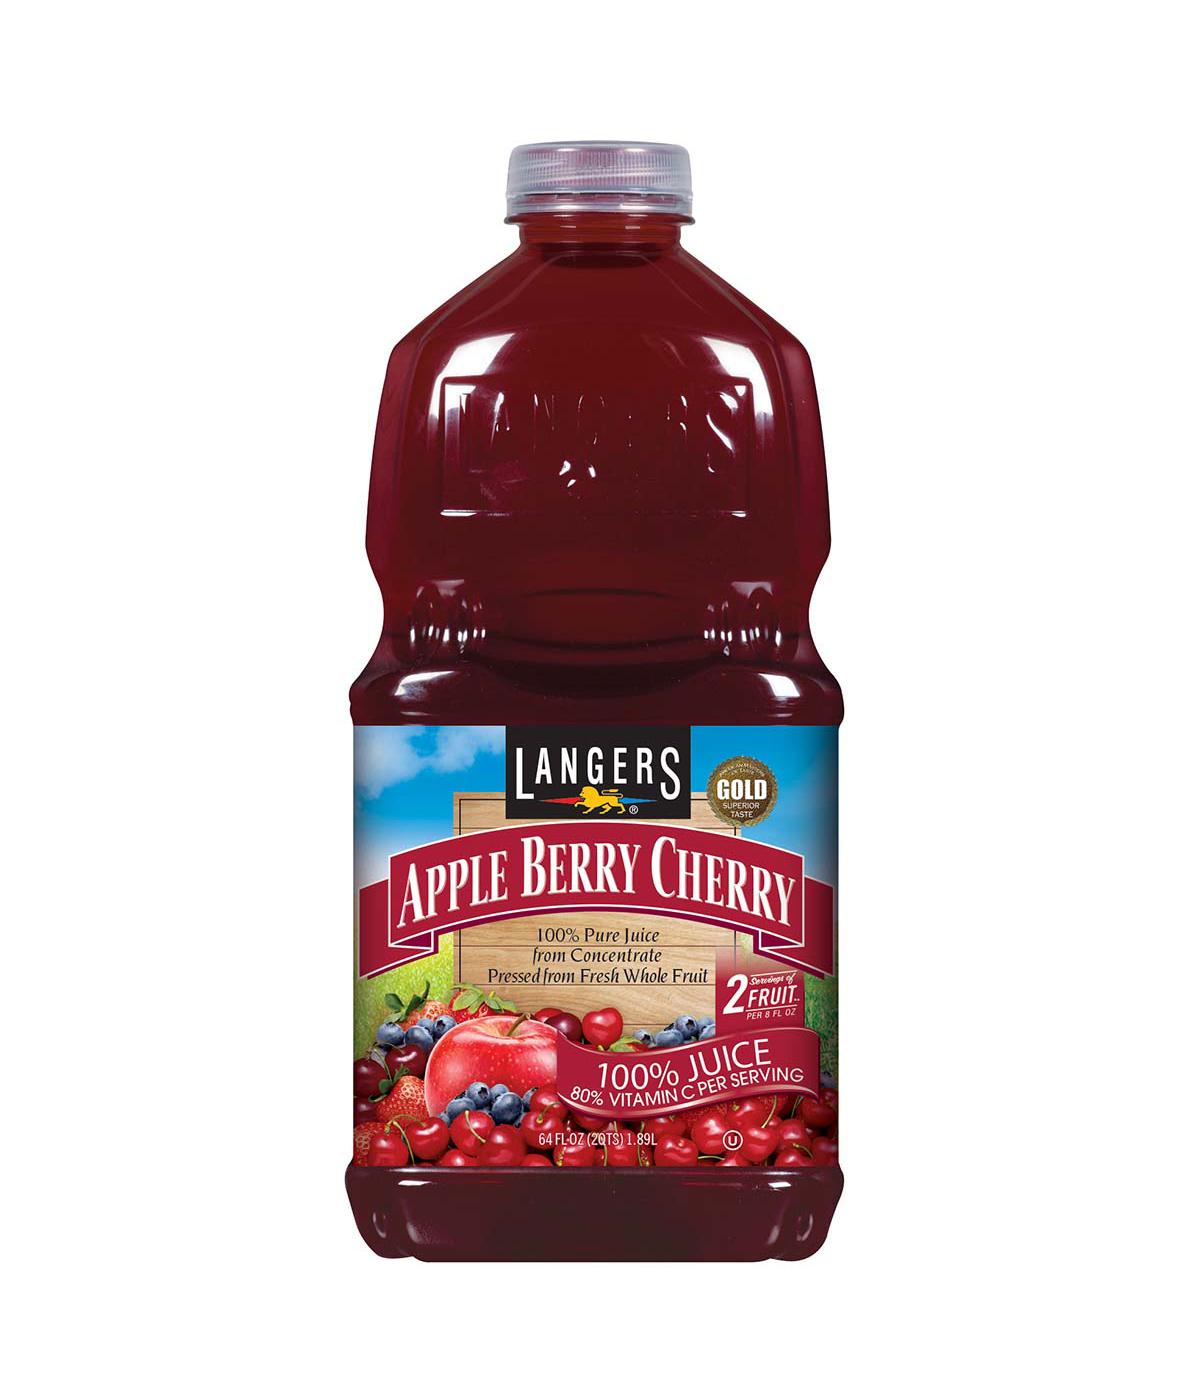 Langers Pure Juice - Apple Berry Cherry; image 1 of 2